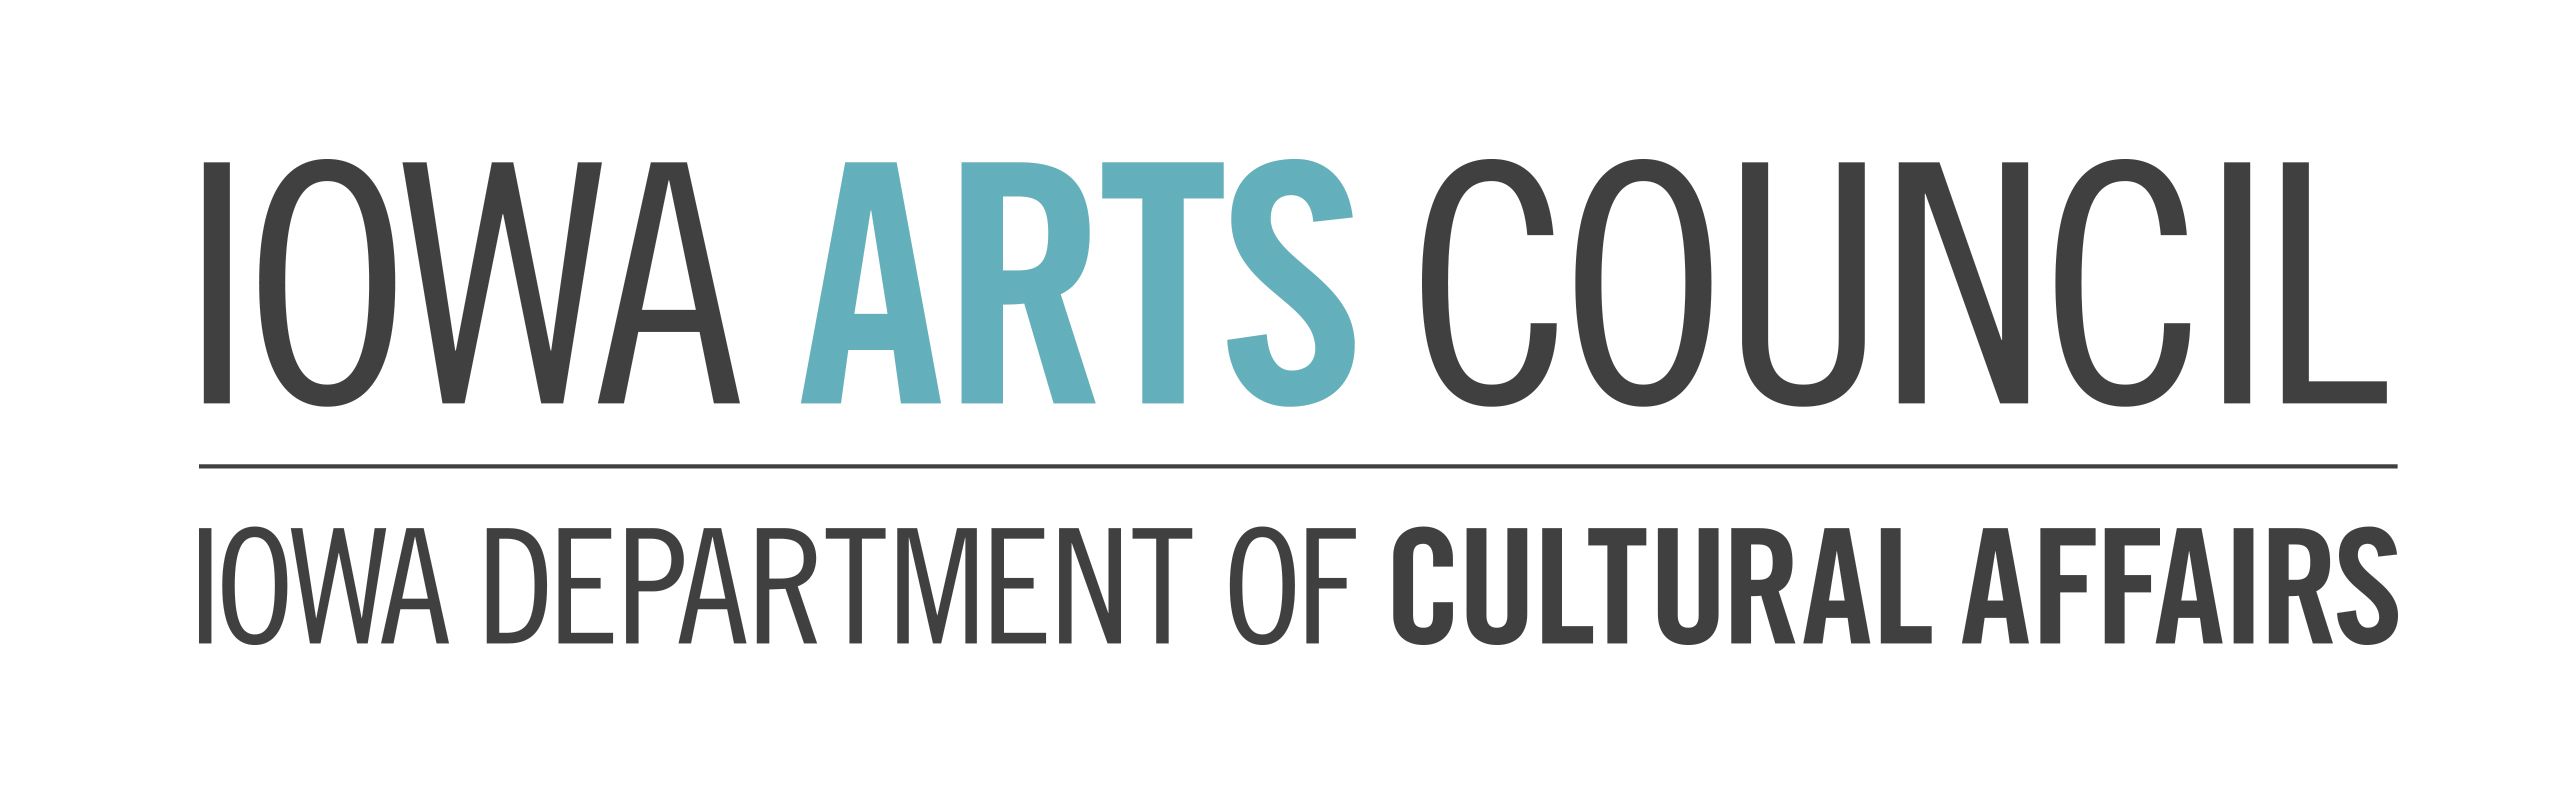 iowa arts council logo